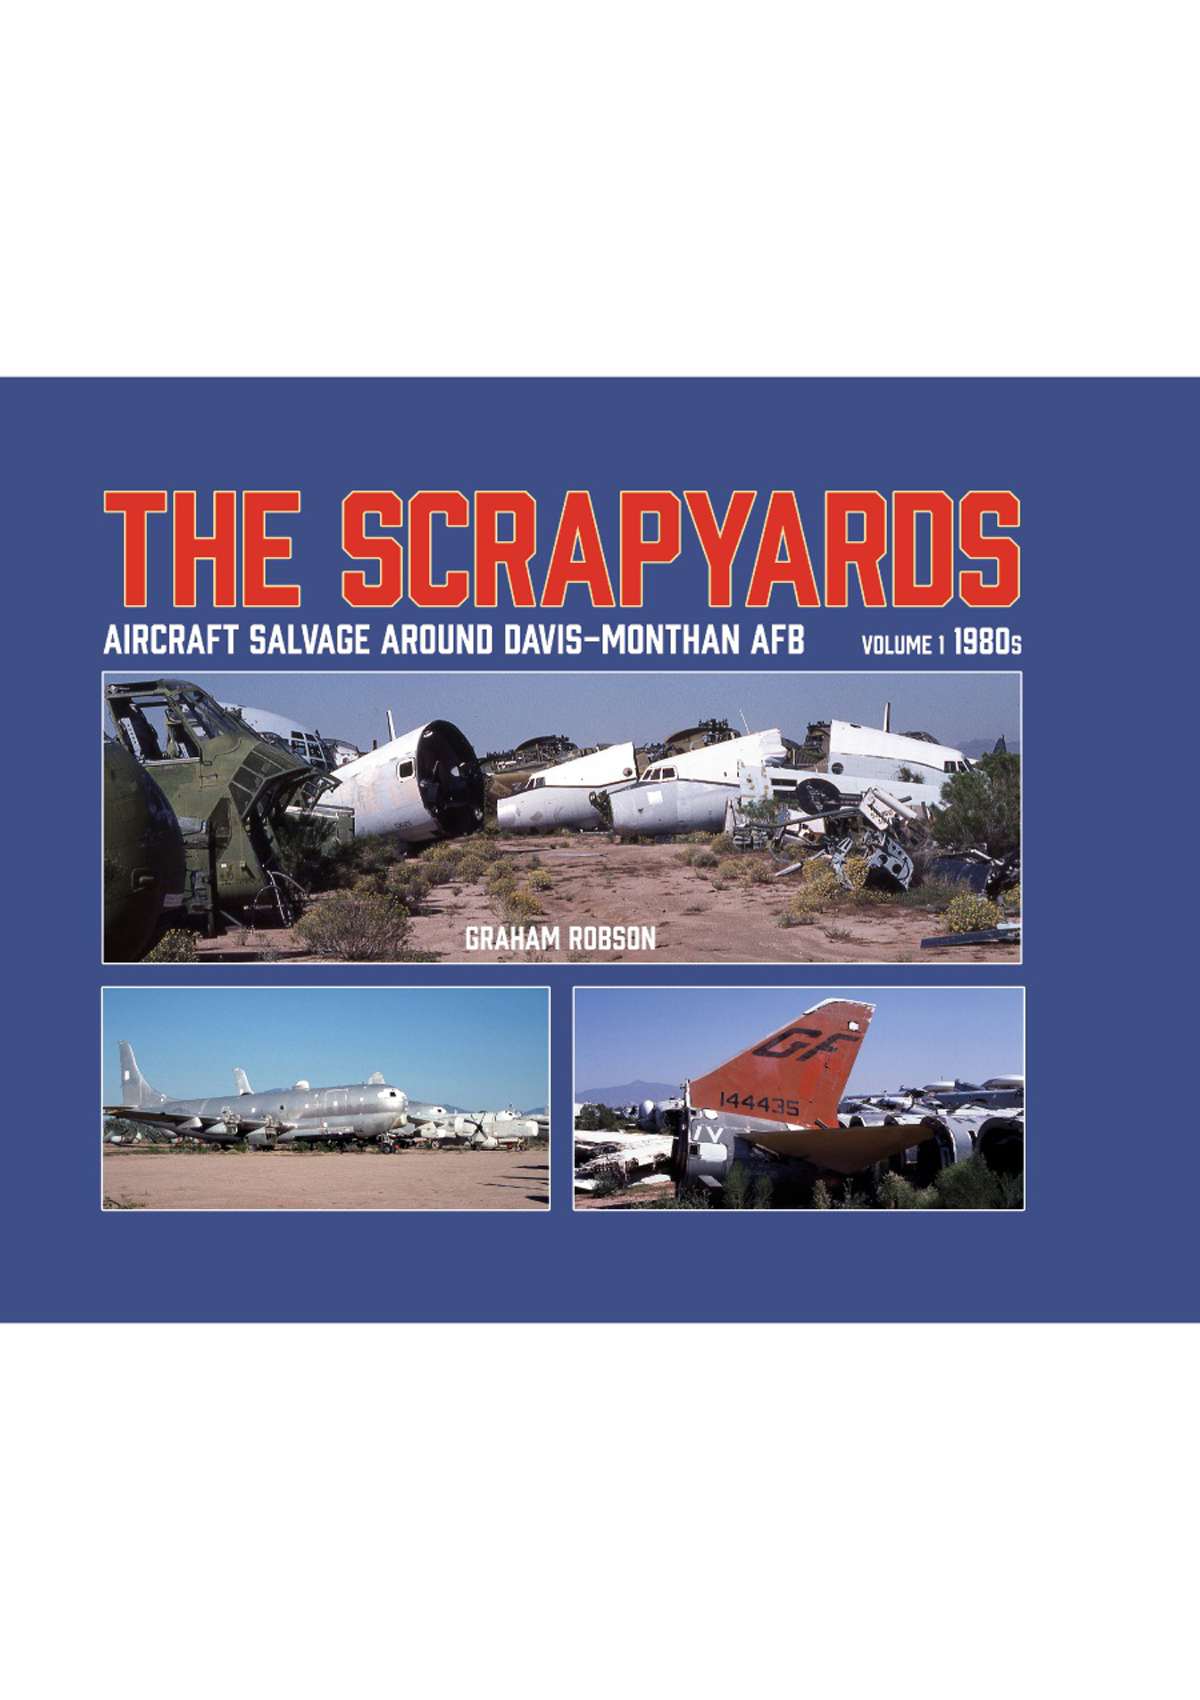 Book: The Scrapyards: Aircraft Salvage around Davis - Monthan AFB Vol 1 1980s